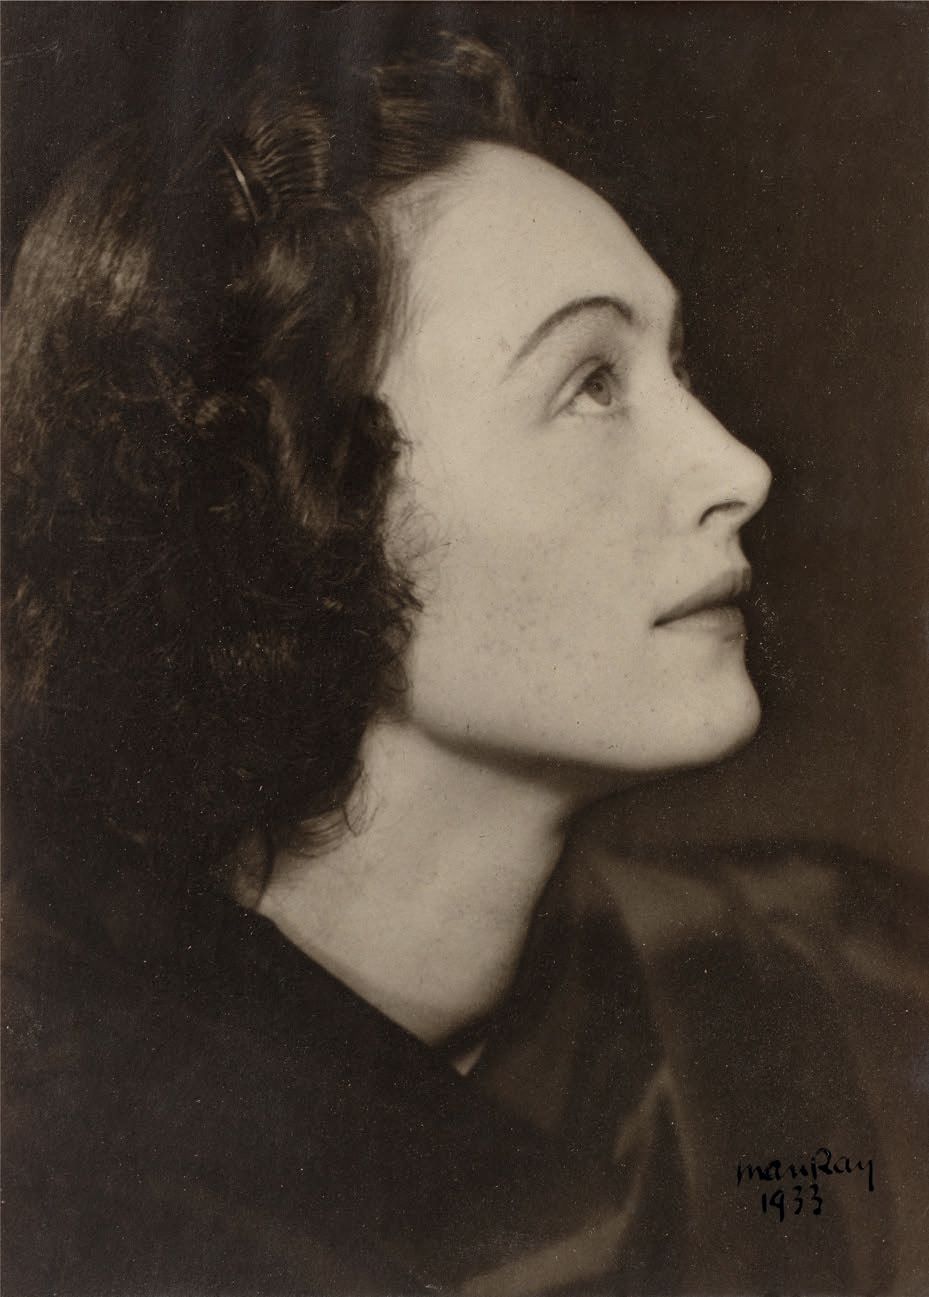 MAN RAY (1890-1976) 努什-艾吕雅的侧面肖像。
原始照片，右下角有签名，日期为1933年，17.5 x 12.6厘米。
安装在纸板上，背面印有&hellip;